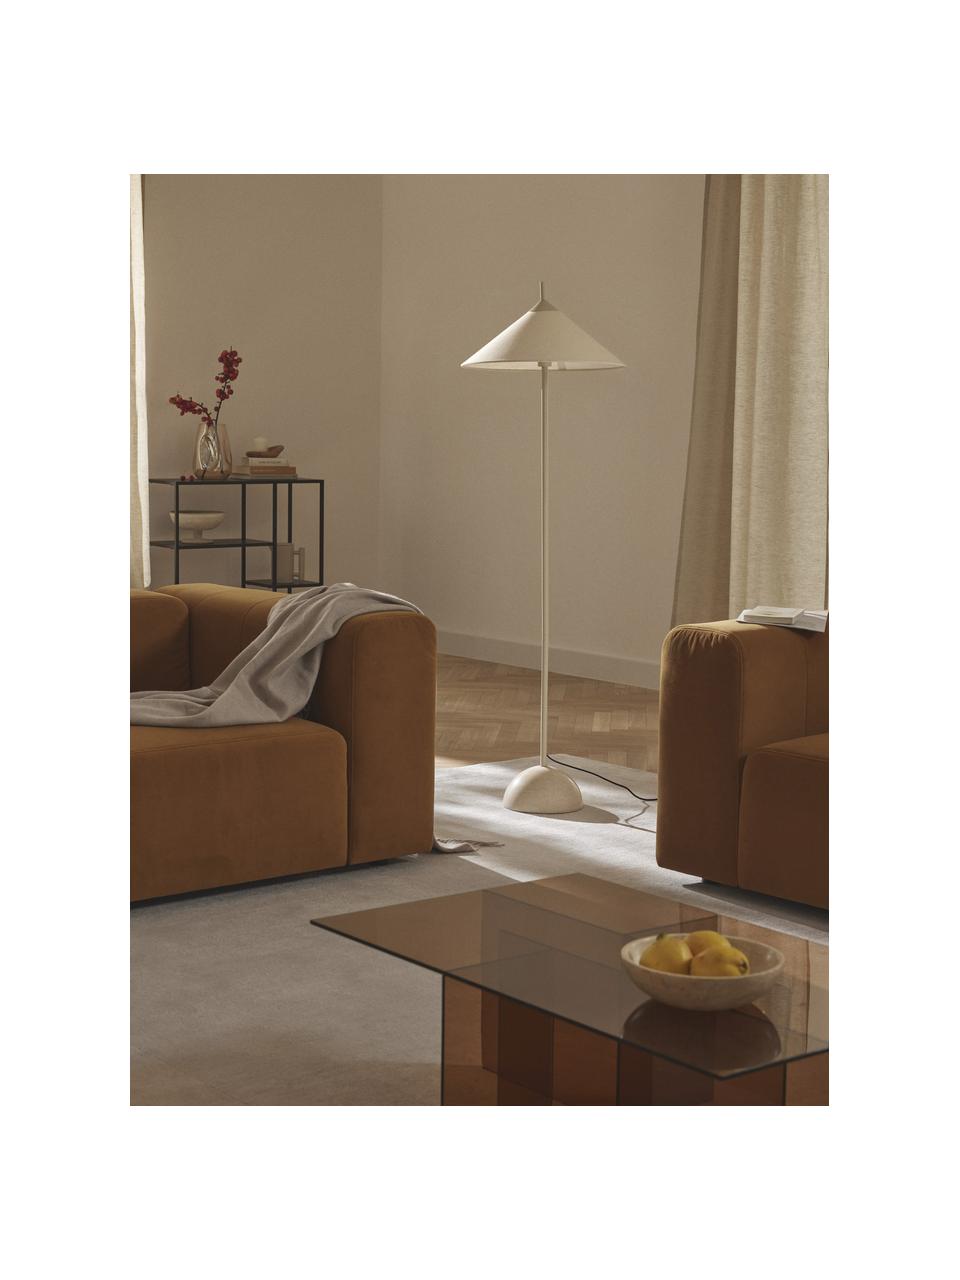 Vloerlamp Vica met marmeren voet, Lampenkap: linnen (100% polyester), Lampvoet: keramiek, Beige, H 160cm